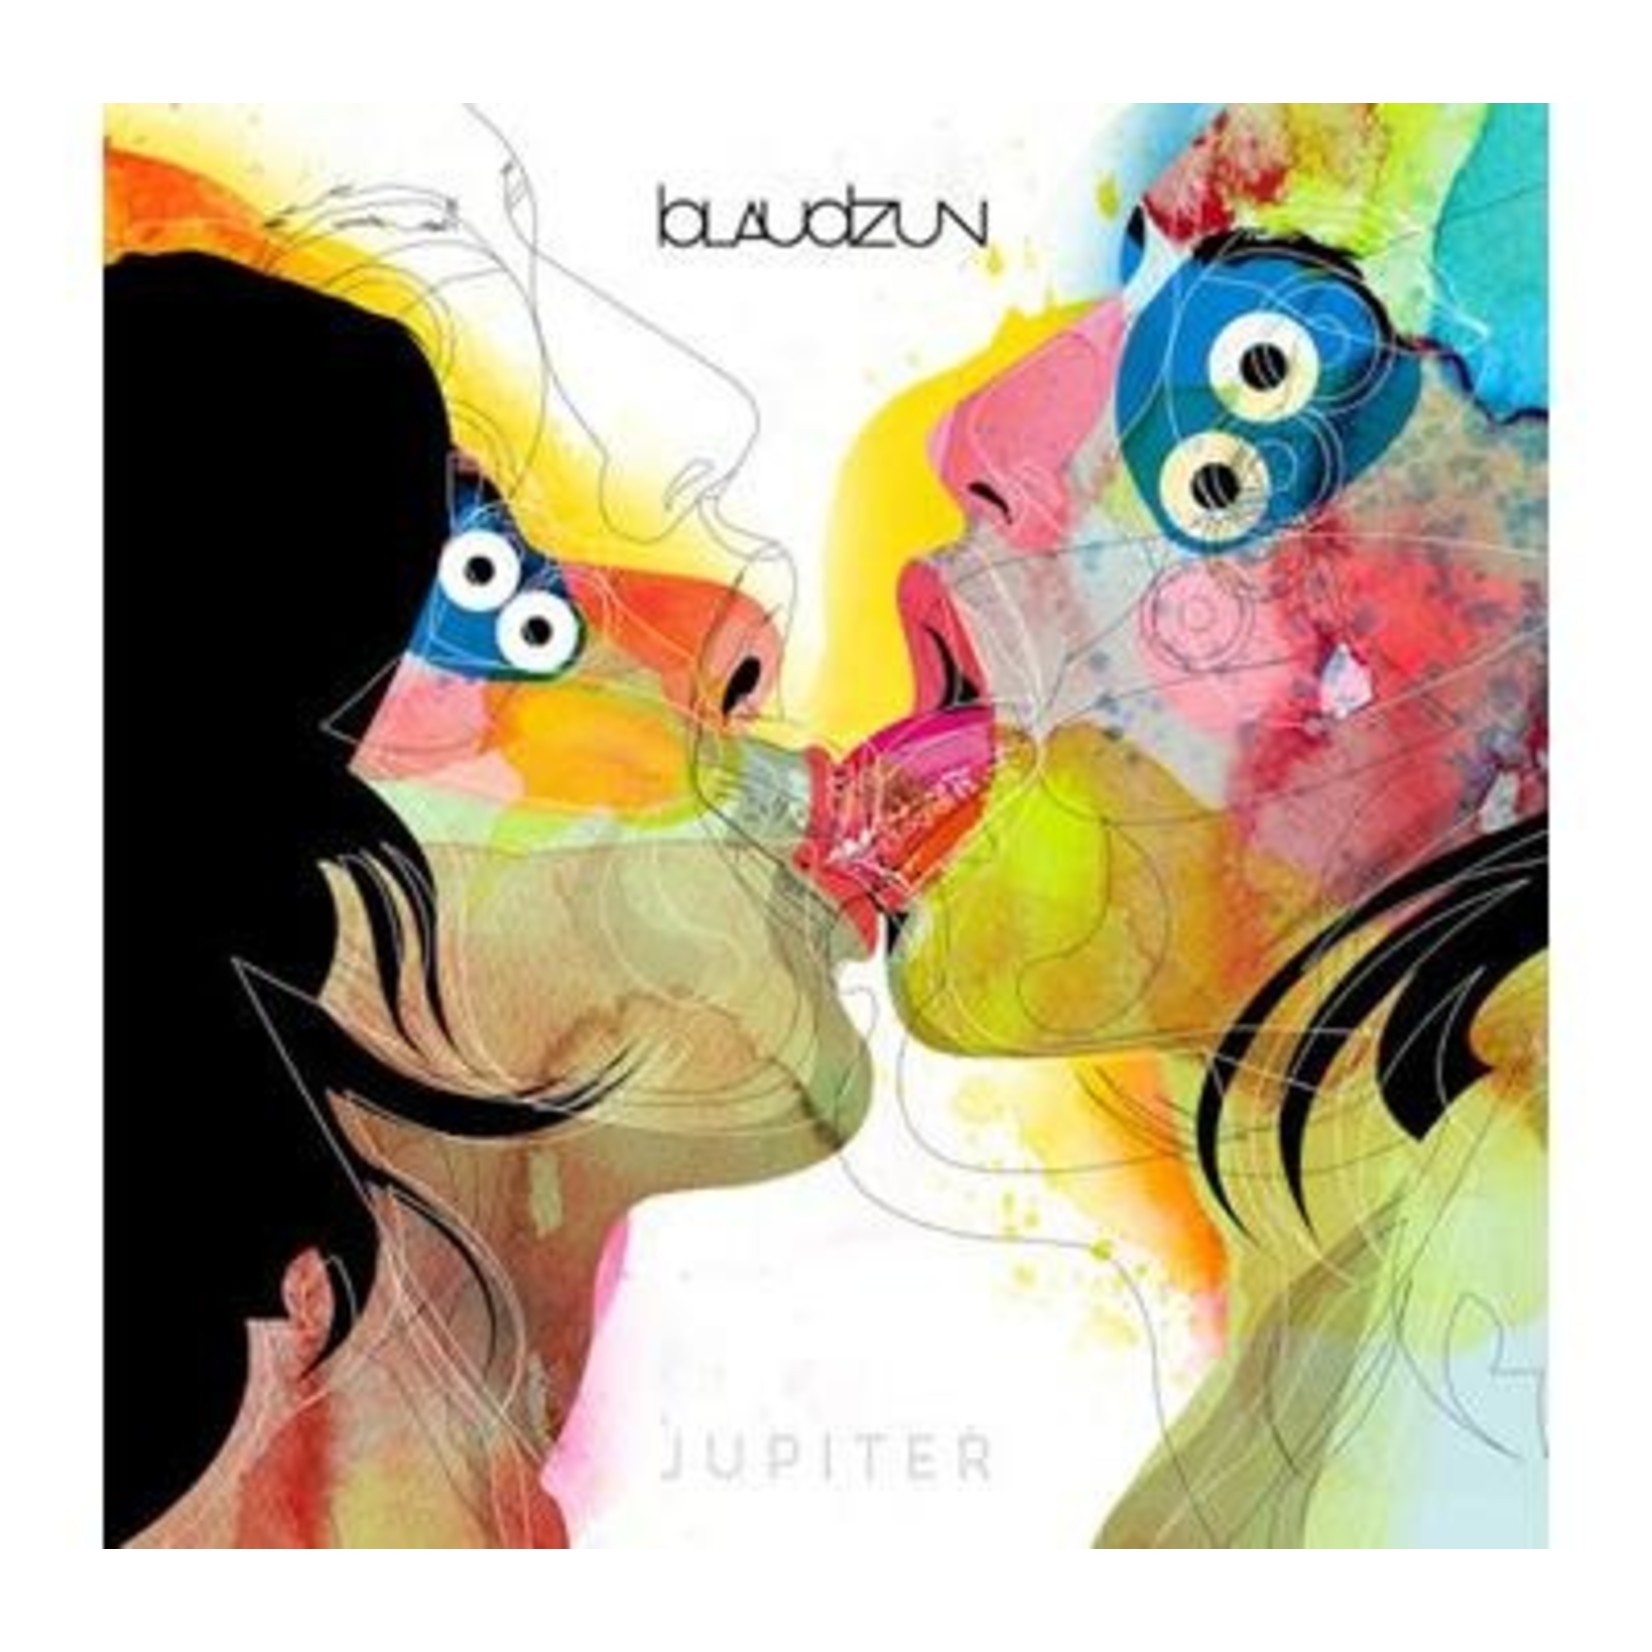 BLAUDZOUN - Jupiter (part I) LP